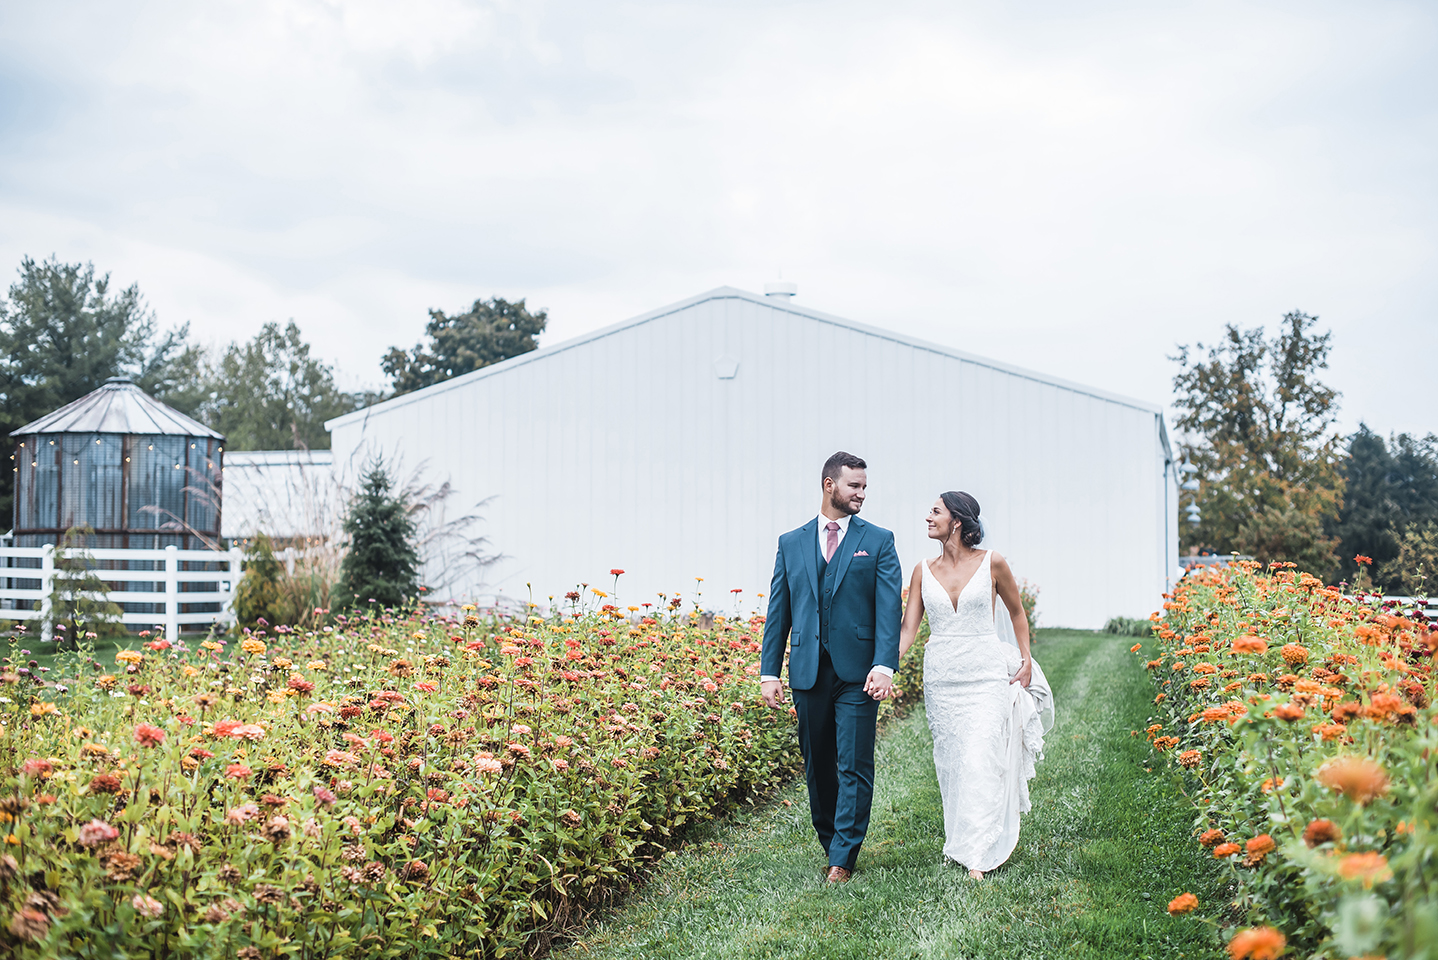 Alum Creek Farm Wedding in Delaware, Ohio